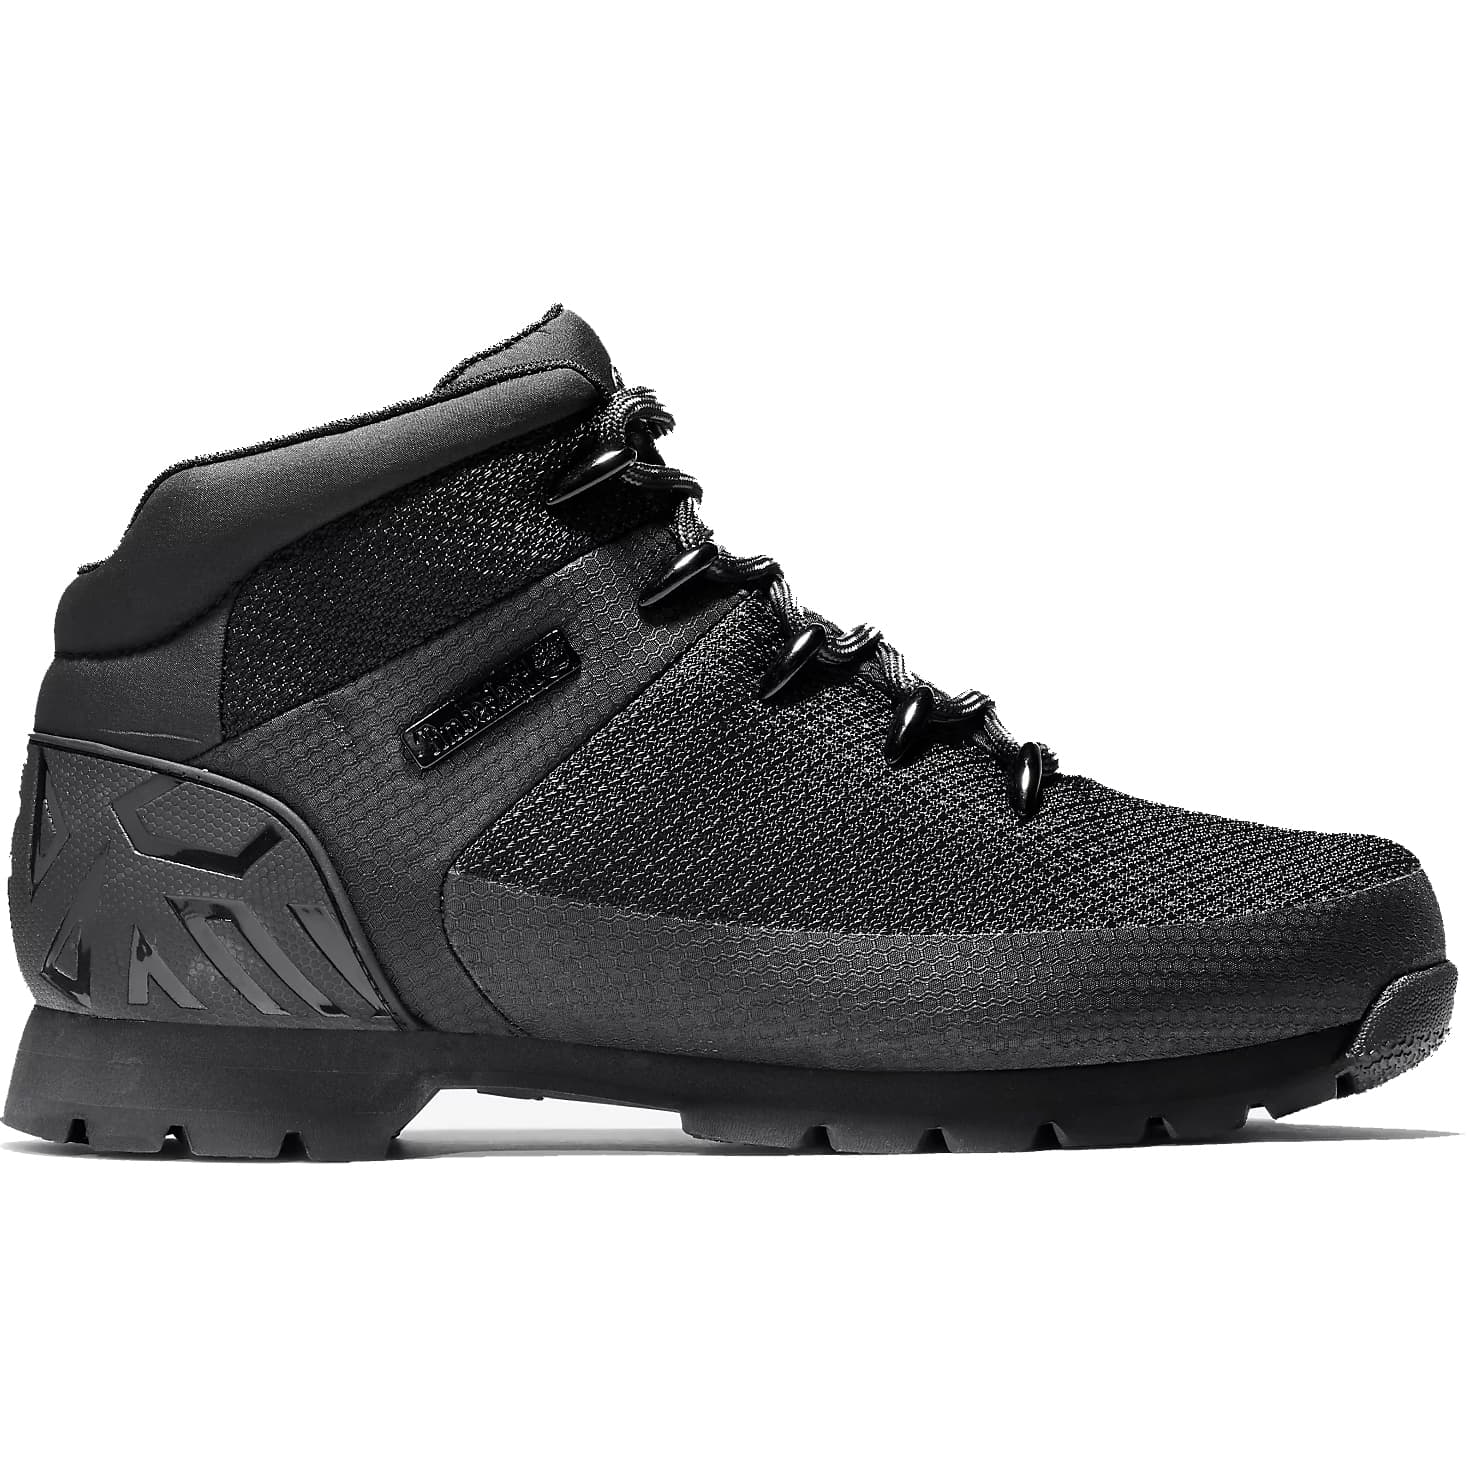 Timberland Mens Euro Sprint Waterproof Walking Chukka Ankle Boots - UK 11 Black 2951